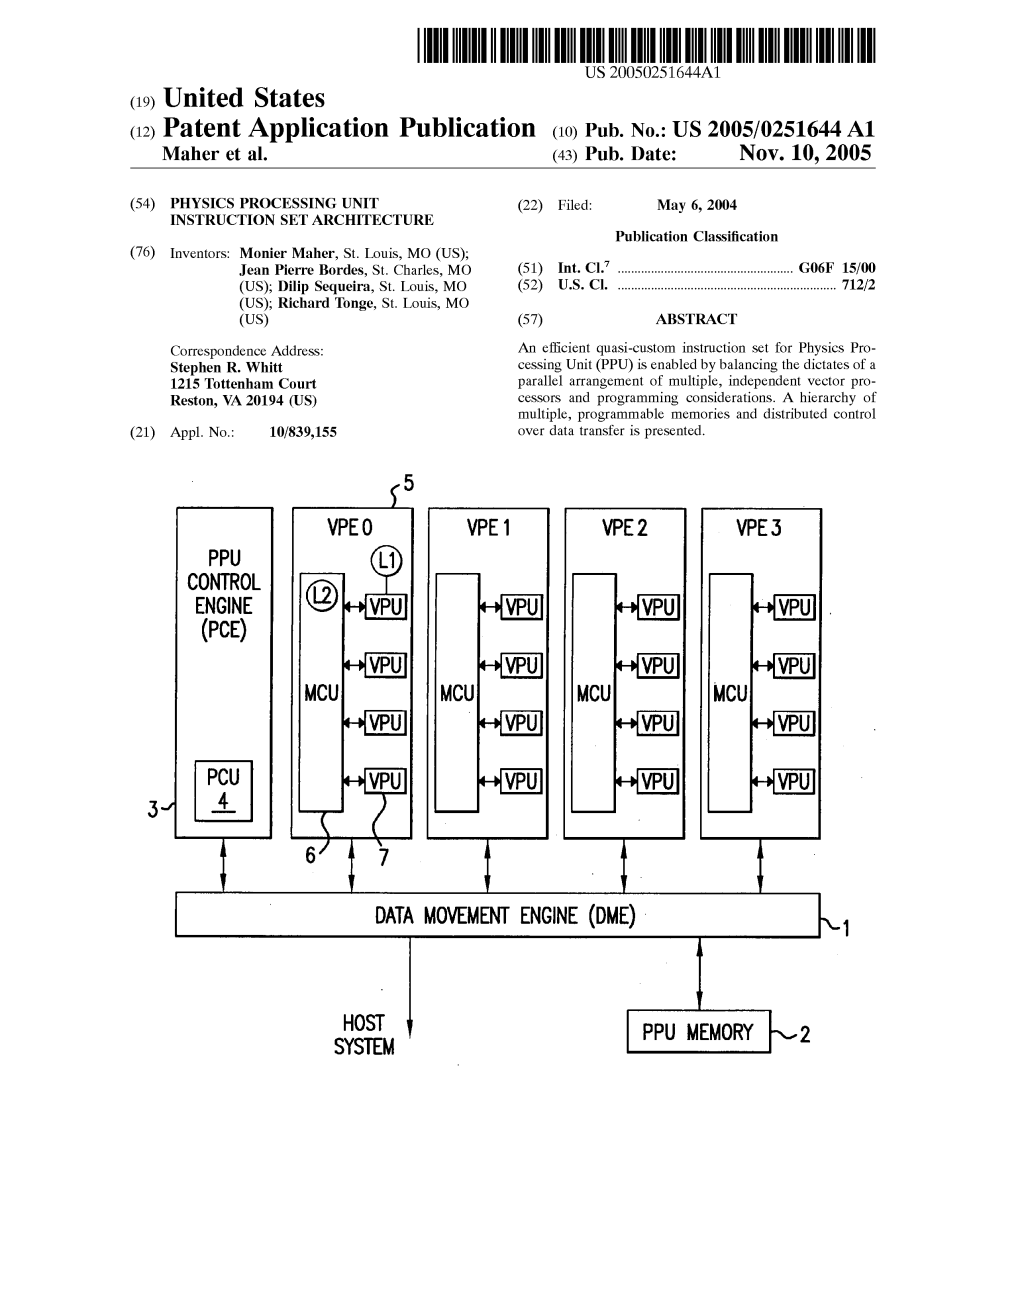 (12) Patent Application Publication (10) Pub. No.: US 2005/0251644 A1 Maher Et Al